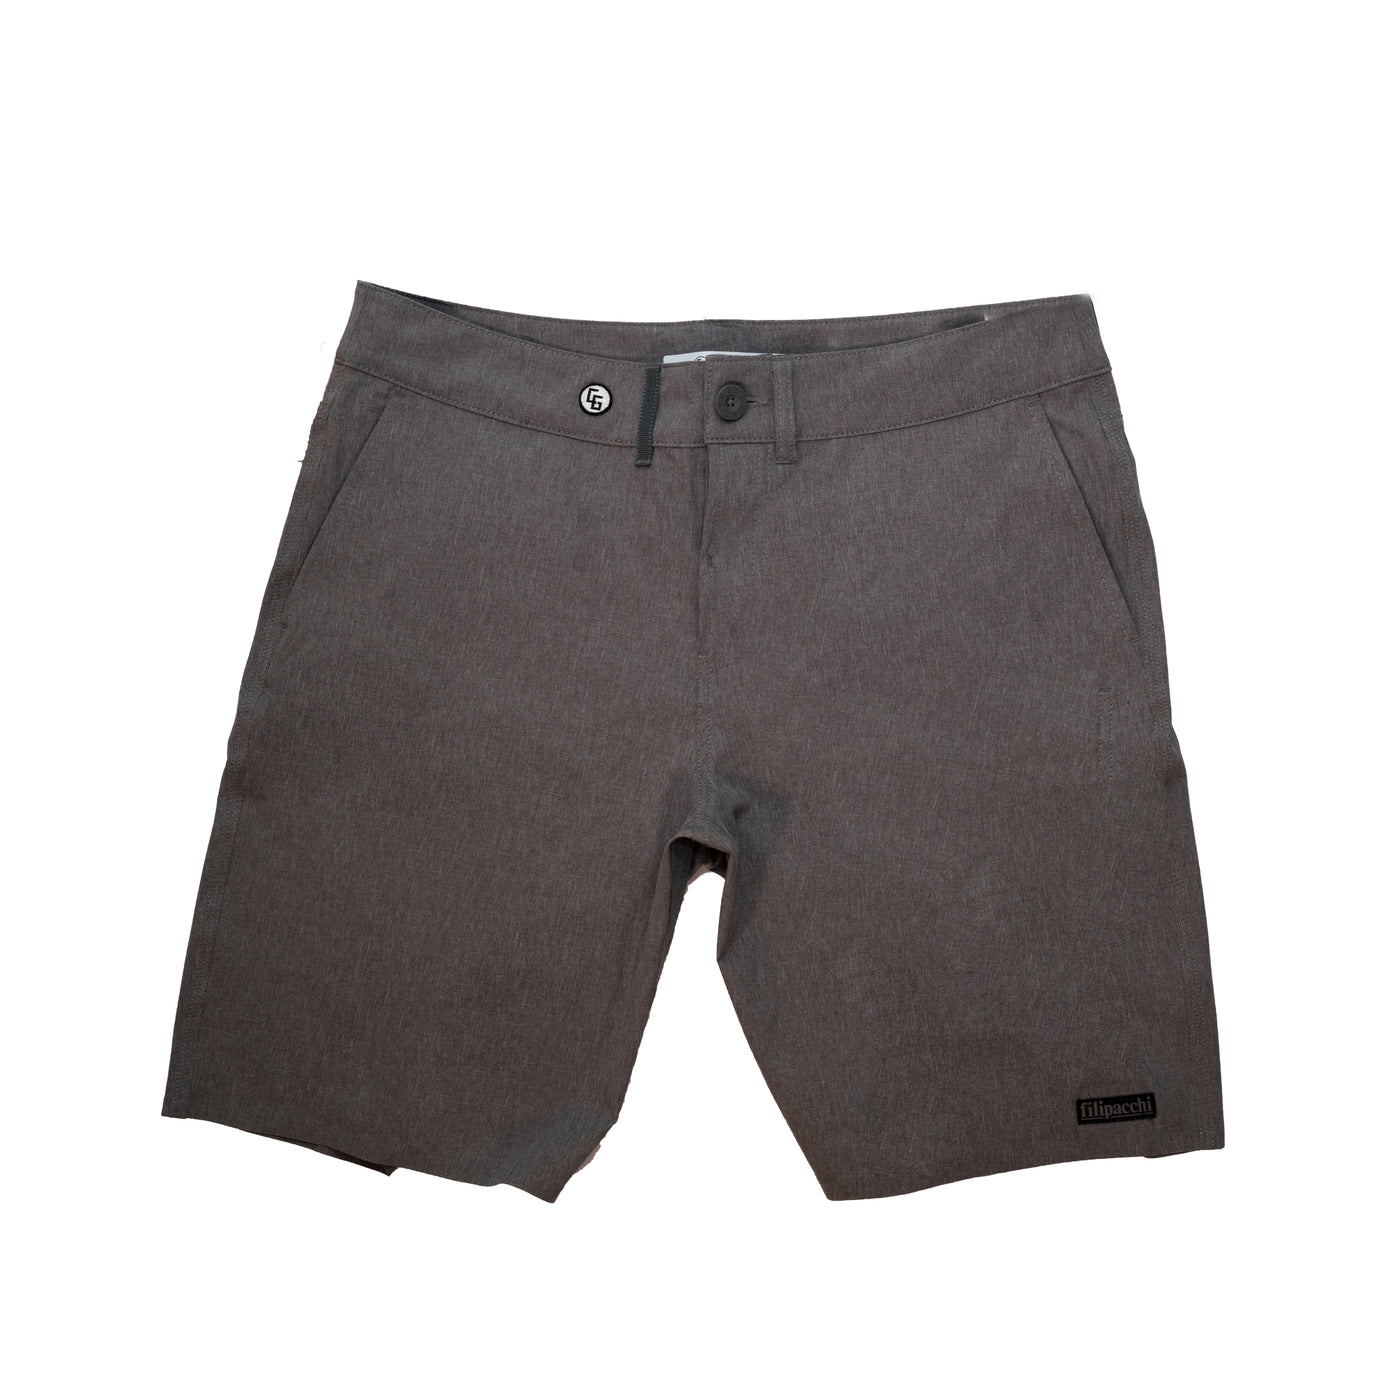 CG Habitats - Filipacchi - 314 Walker fit Board Shorts - Grey